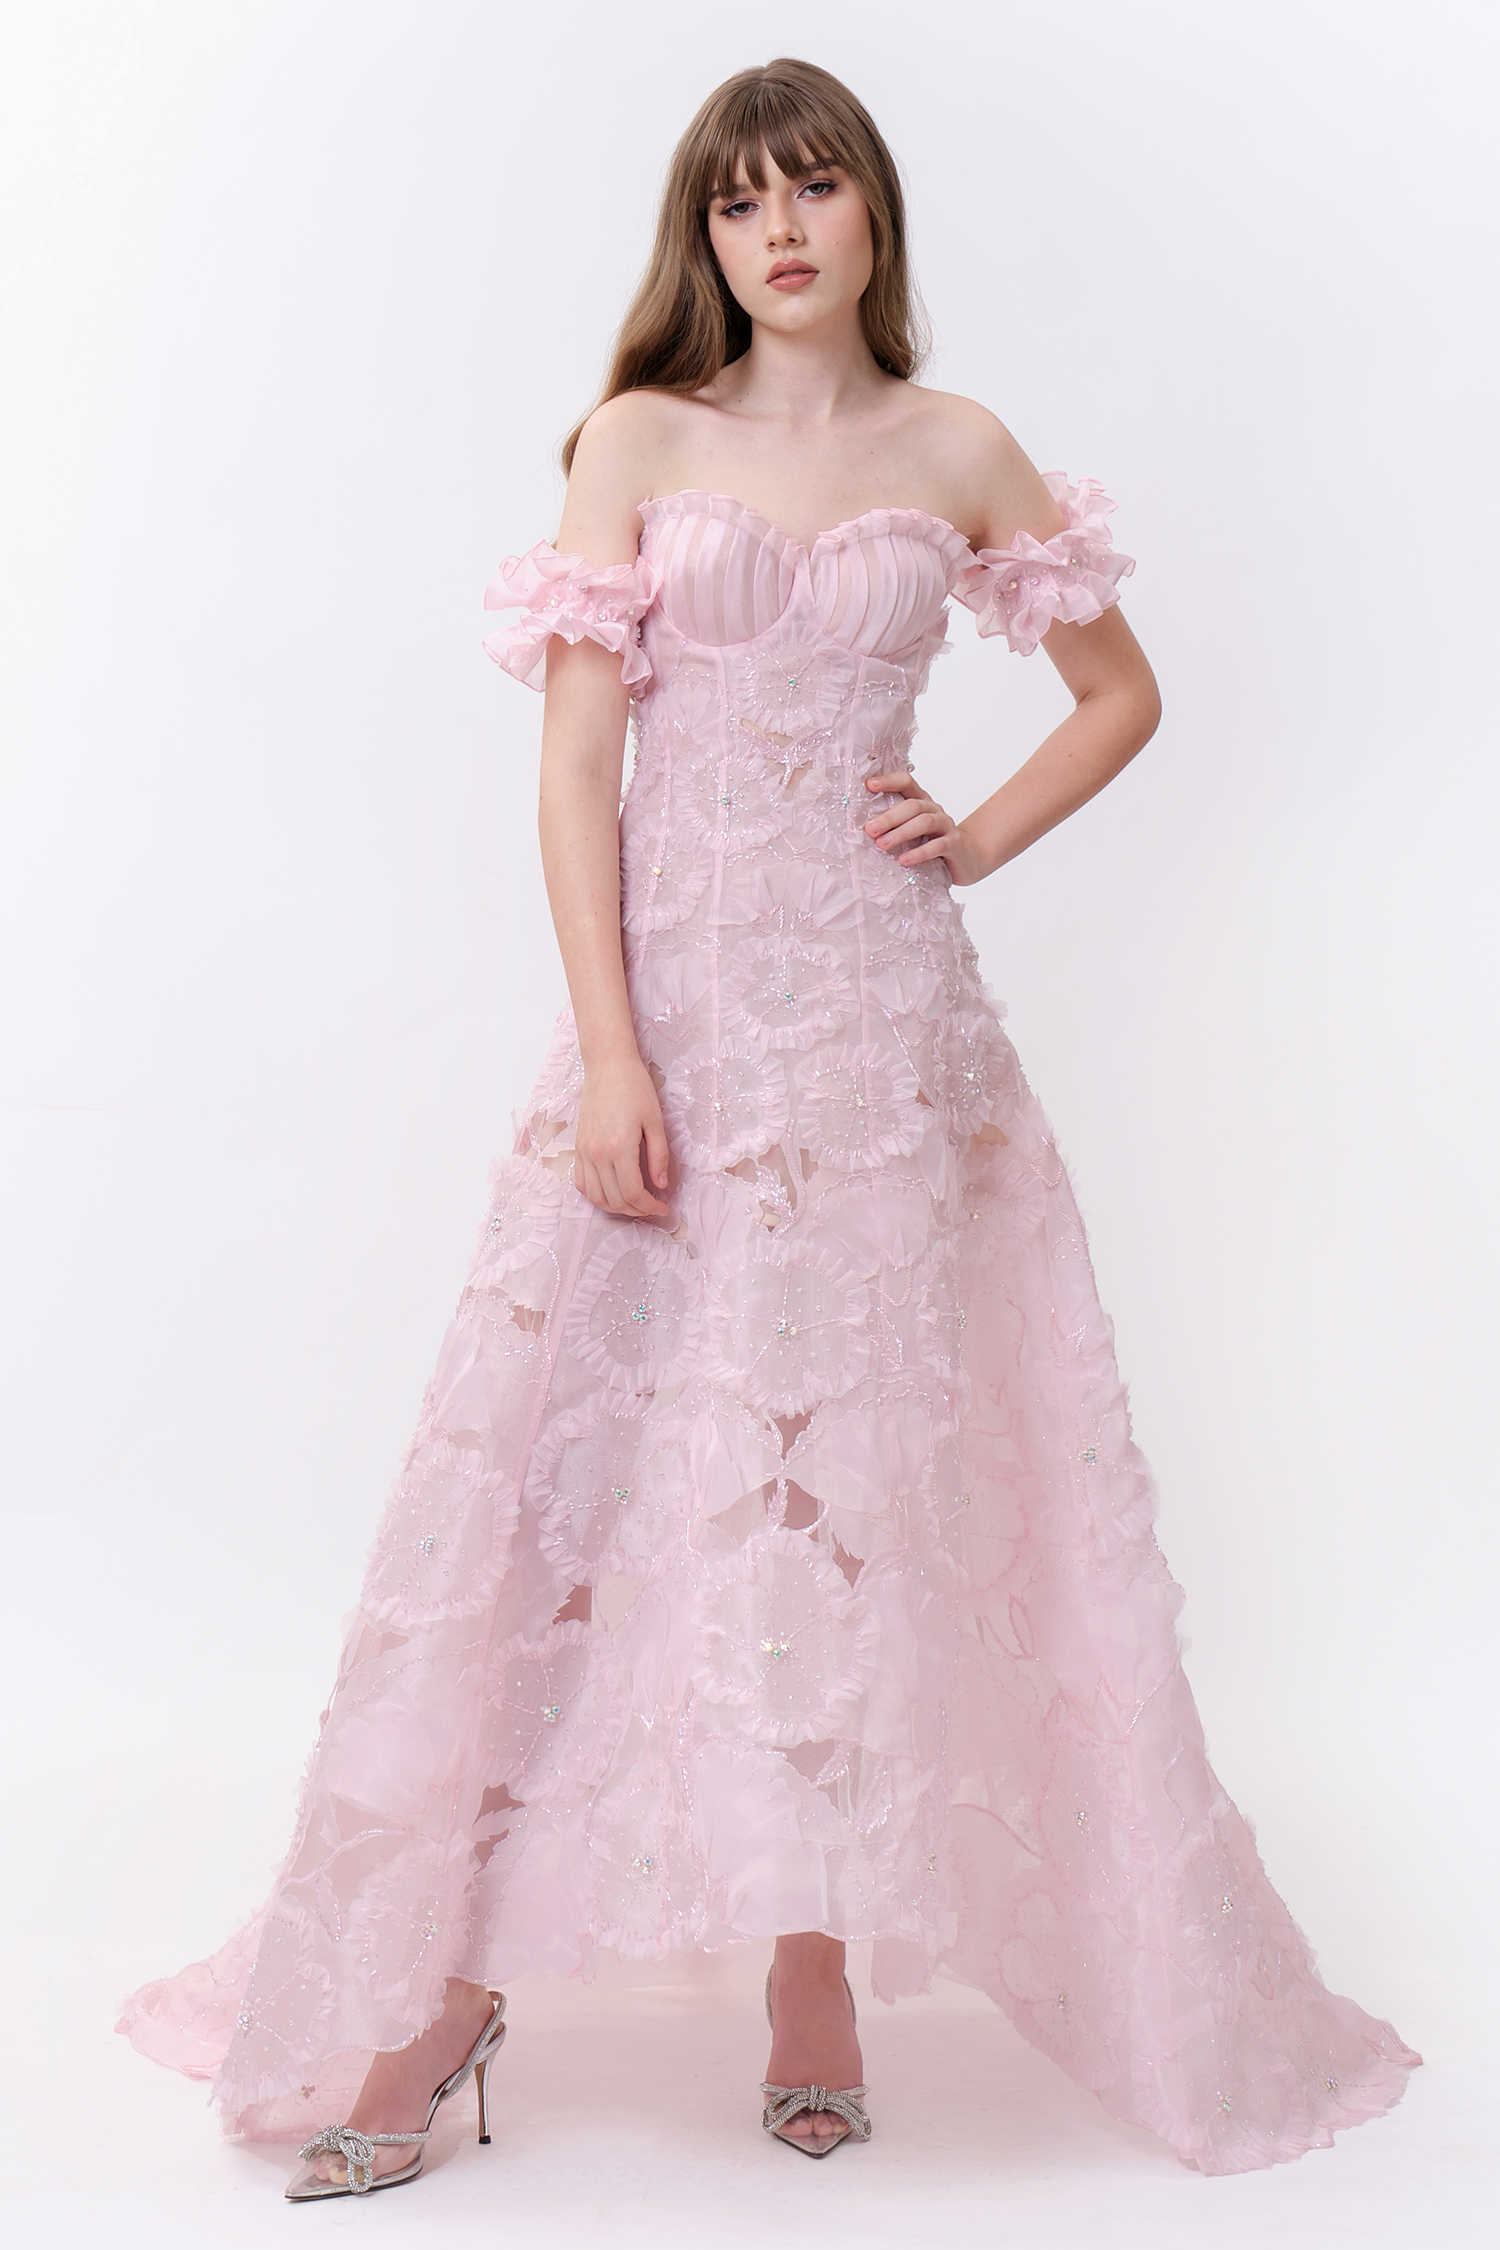 Dianthal Dress - Baby Pink